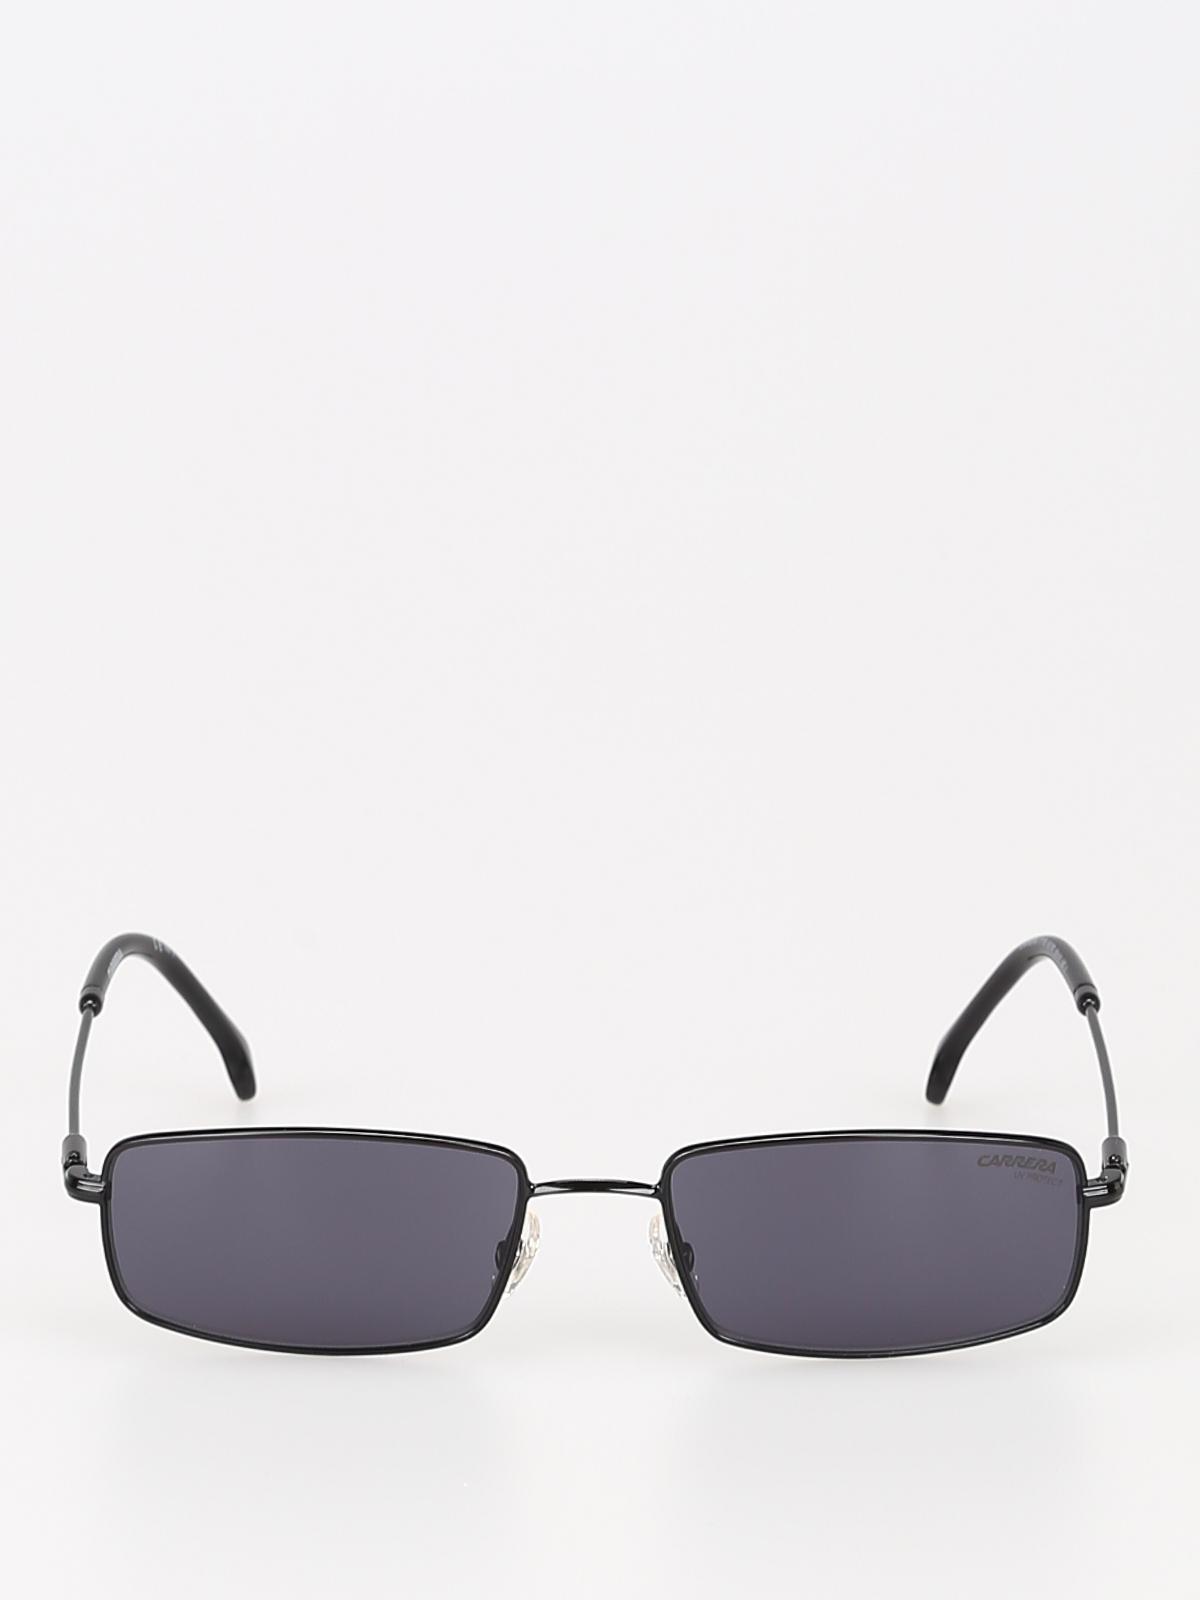 Sunglasses Carrera - Black metal rectangular sunglasses - 177S807IR